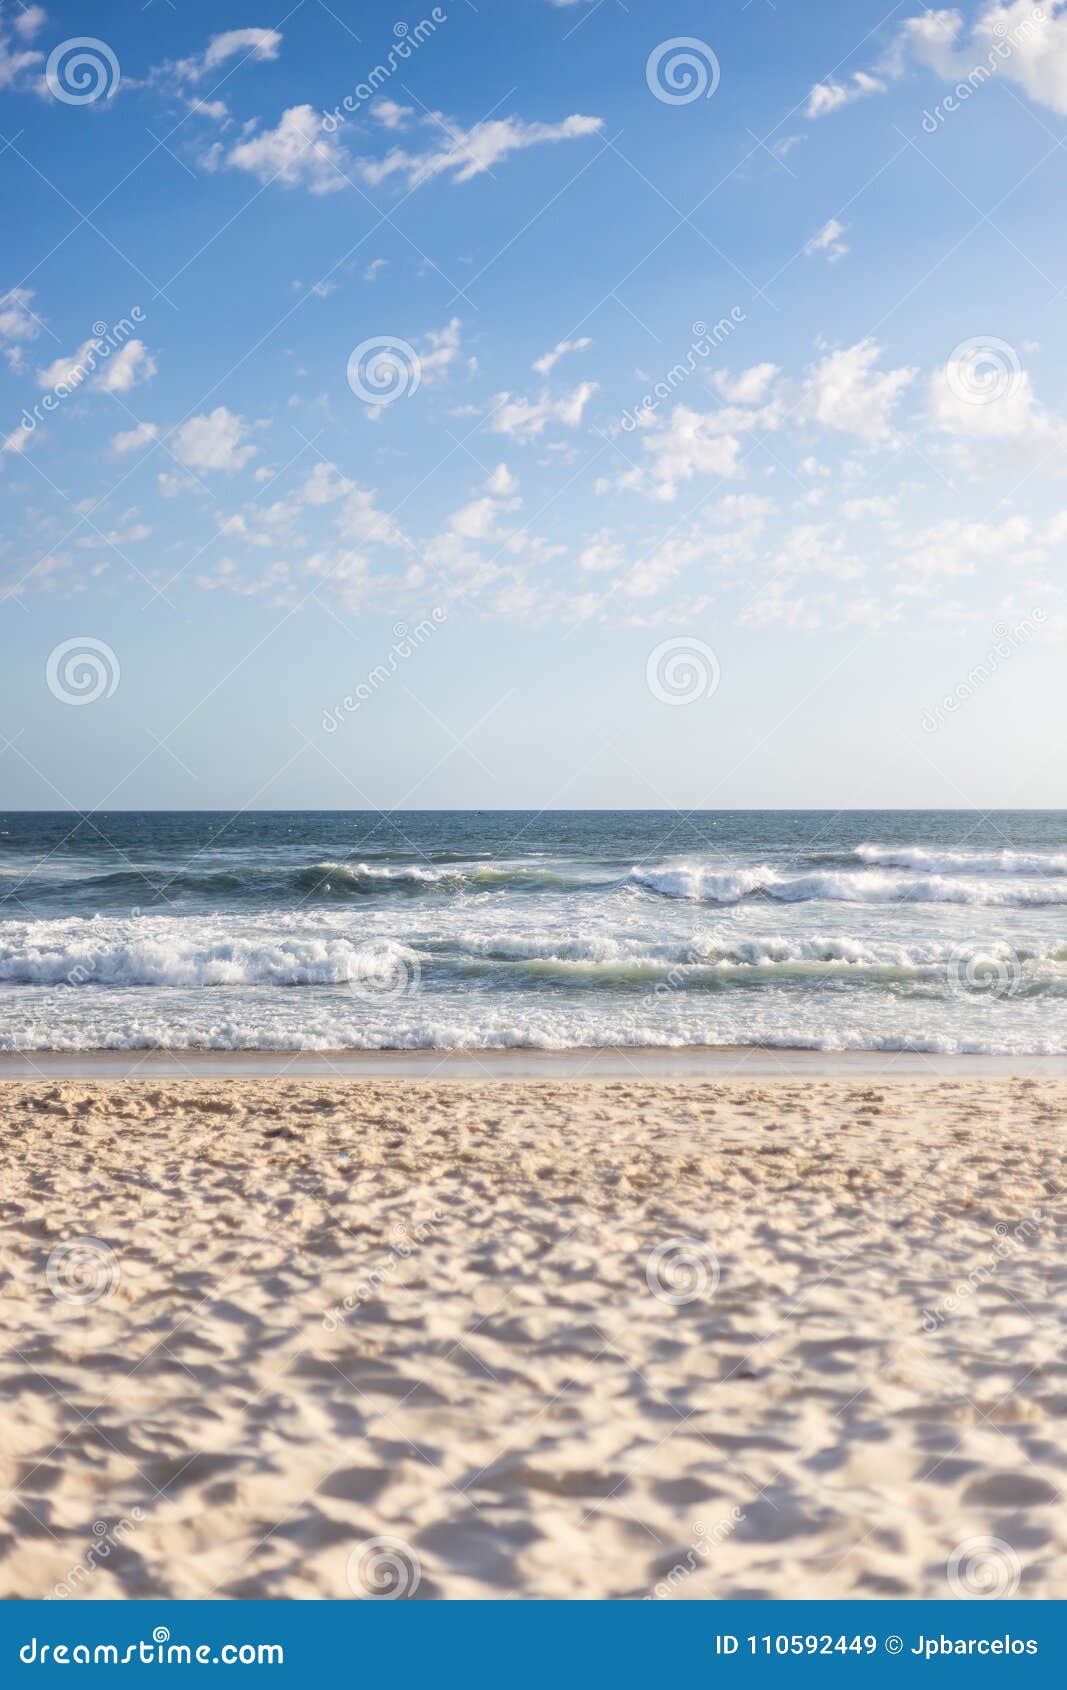 barra da tijuca beach on a beatiful afternoon